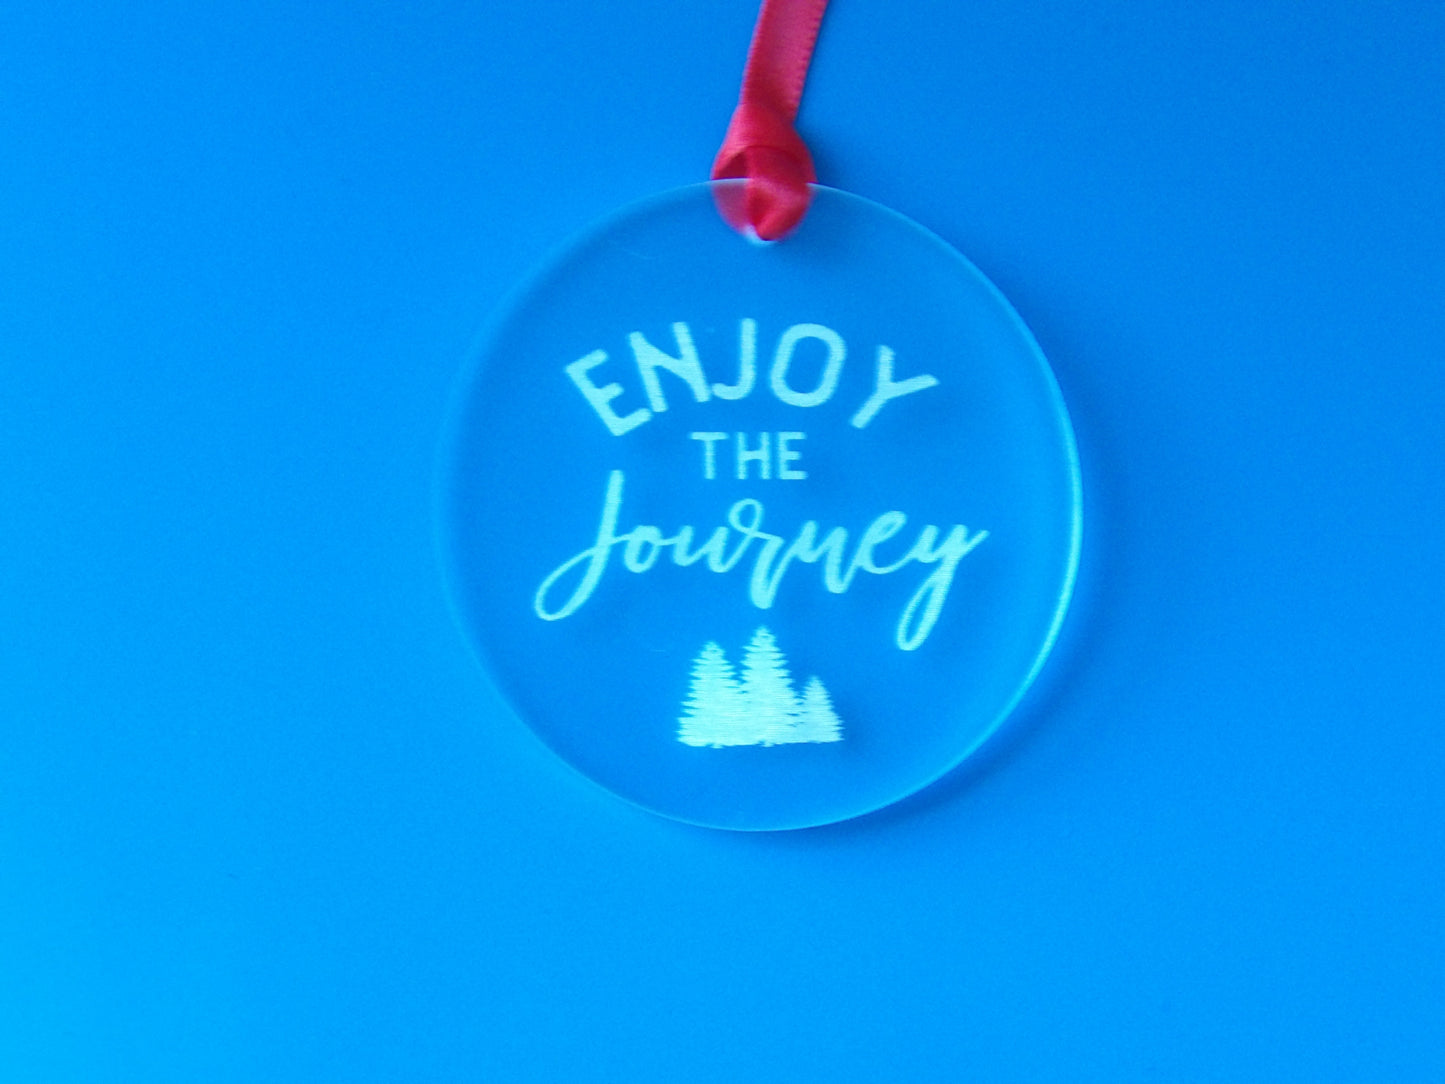 Enjoy the Journey Clear Acrylic Christmas Tree Ornament